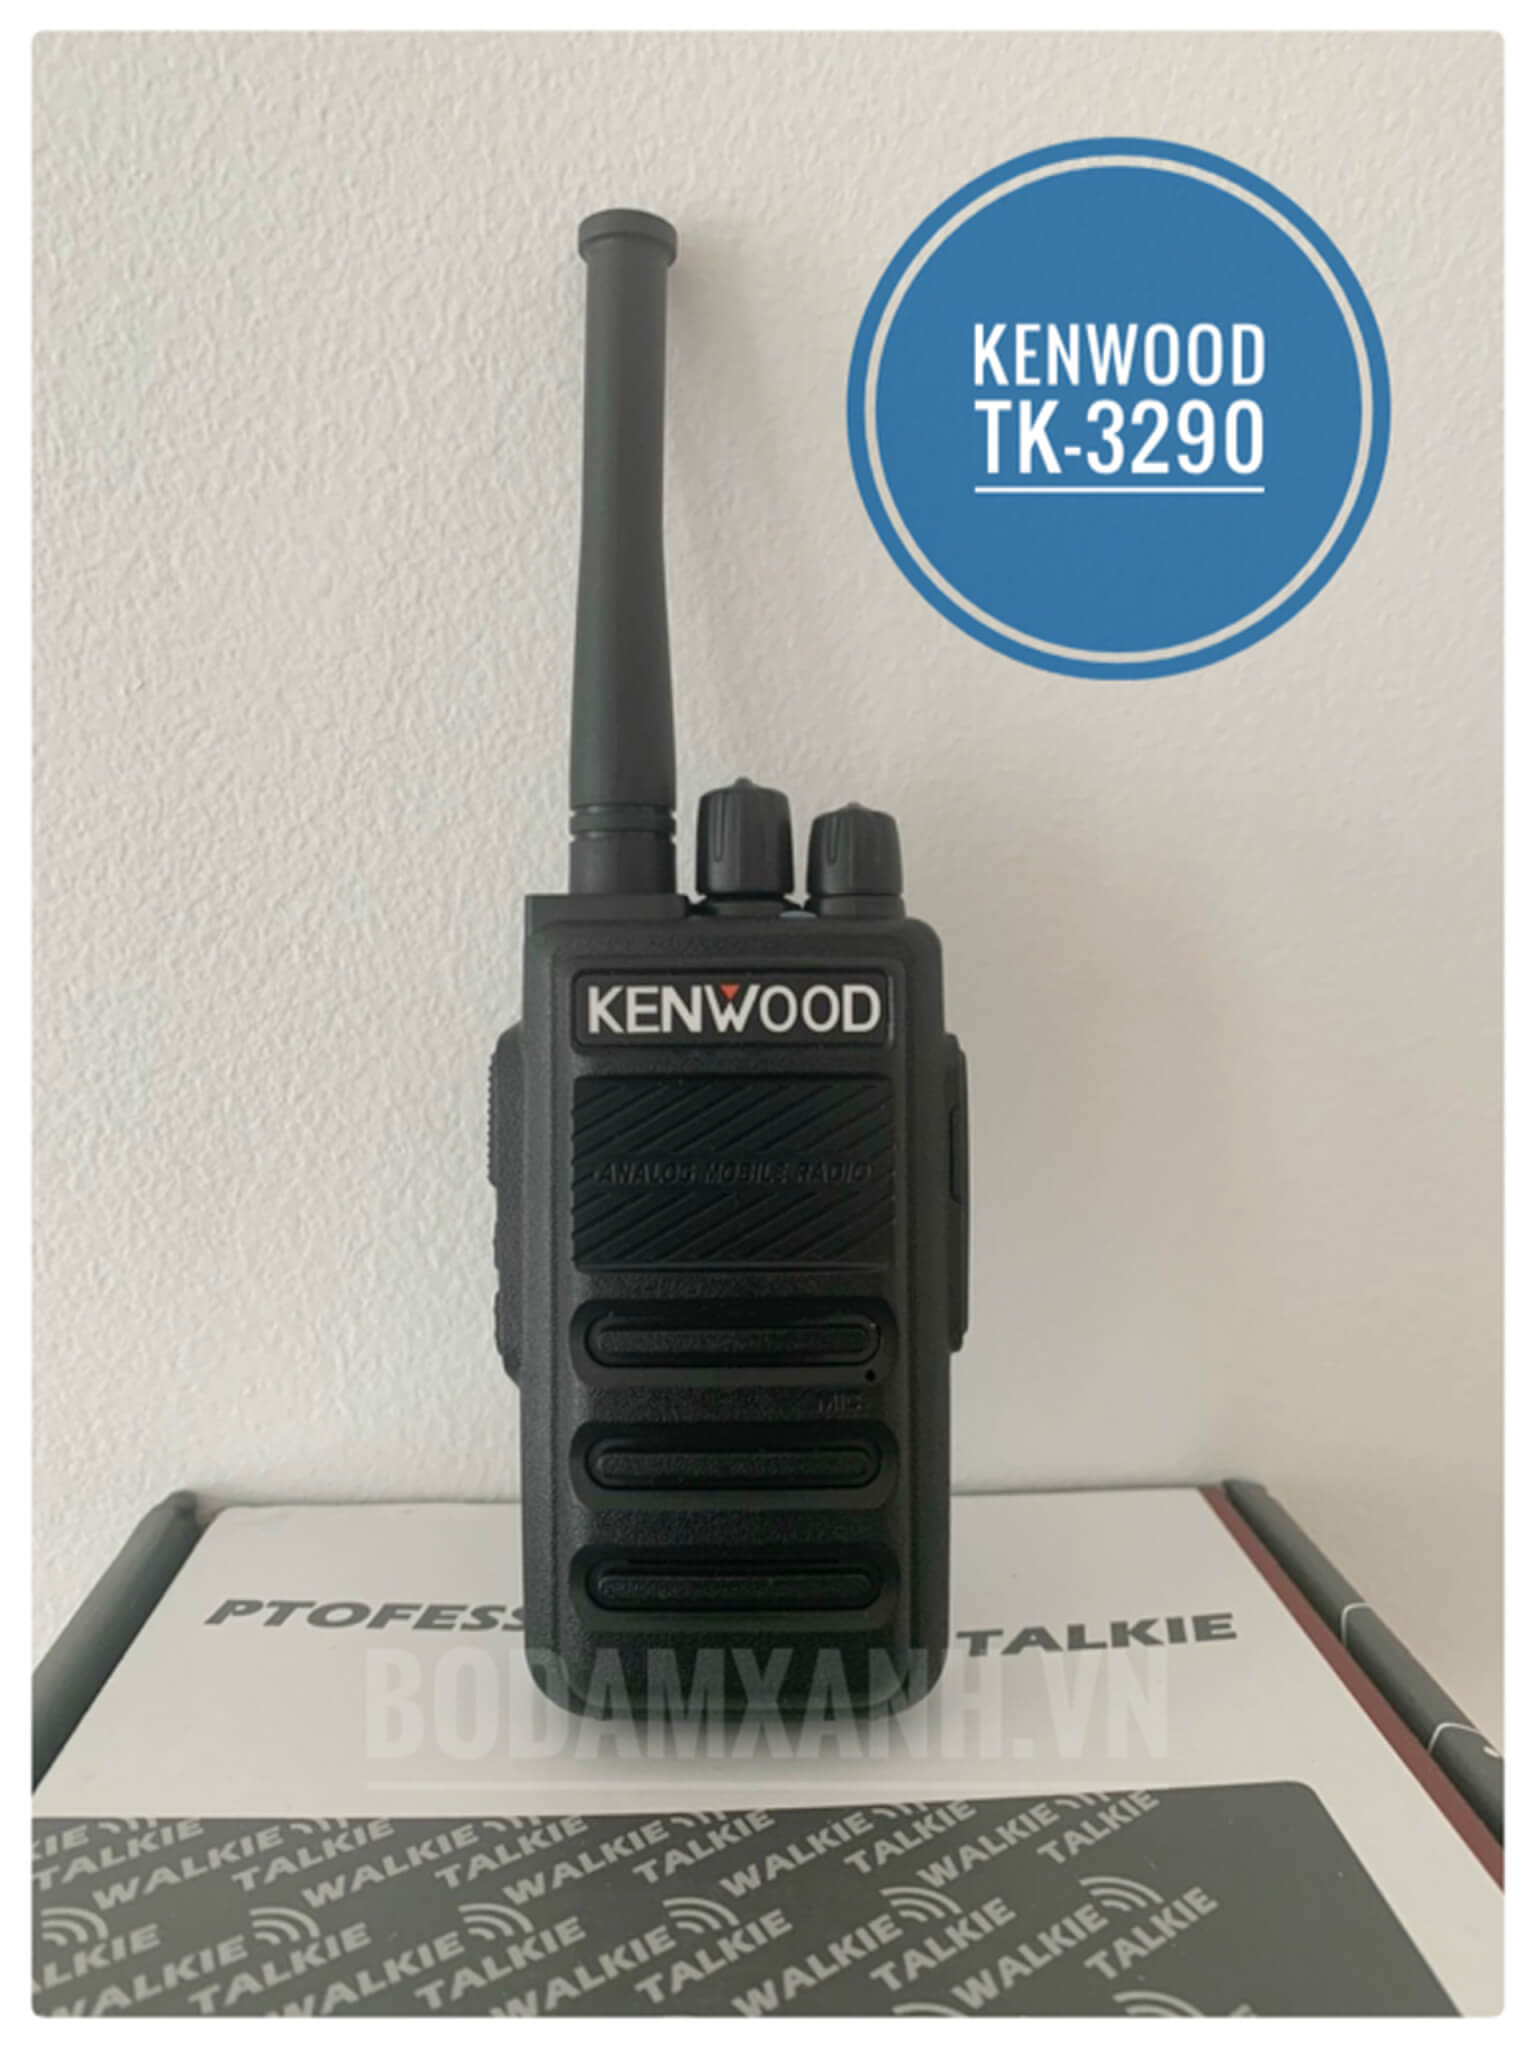 Kenwood TK-3290